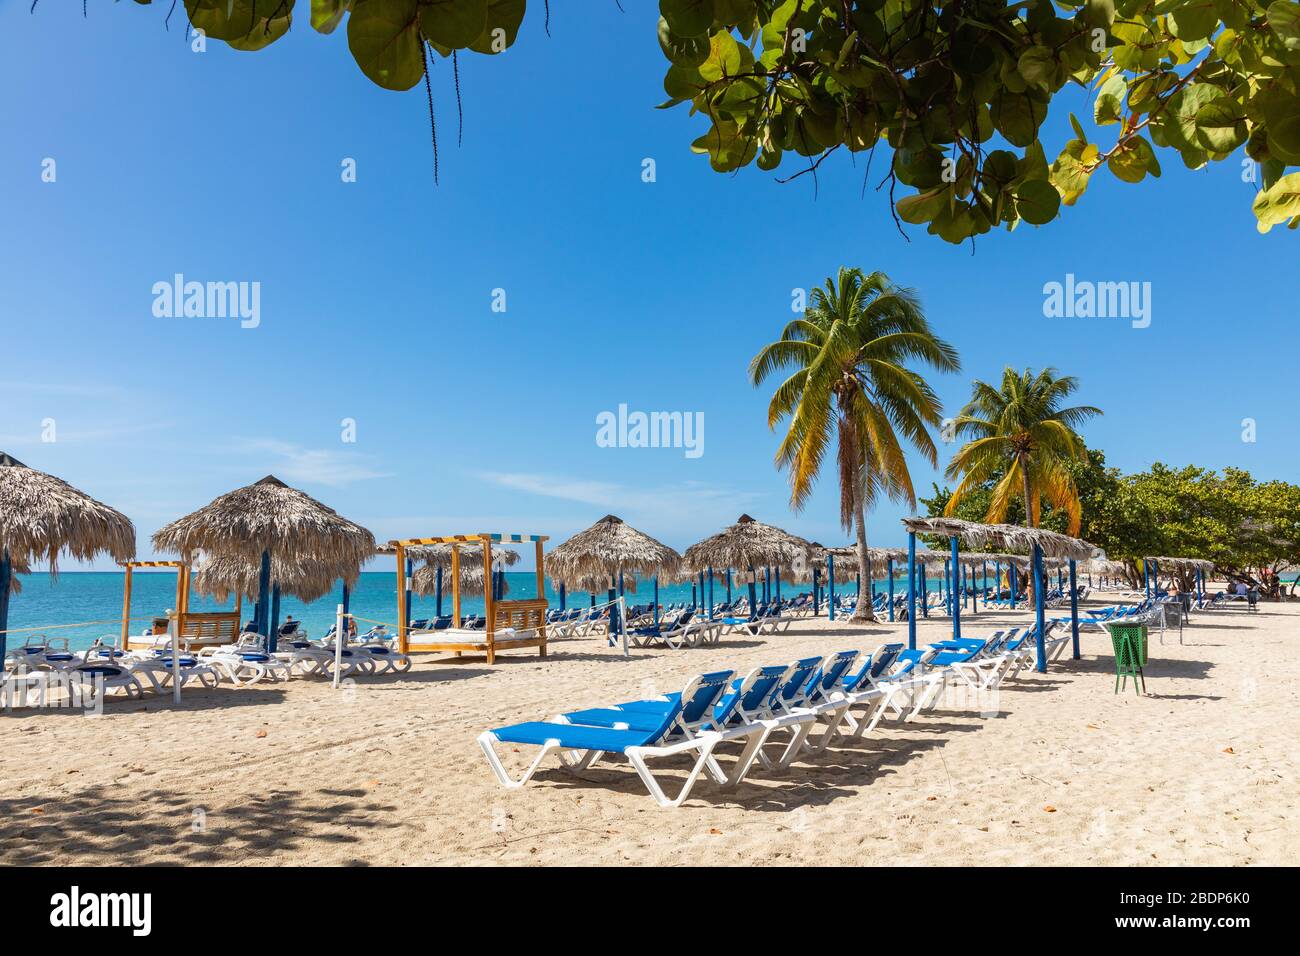 PLAYA ANCON, CUBA - DECEMBER 17, 2019:  View of a beach Playa Ancon near Trinidad, Cuba. Stock Photo